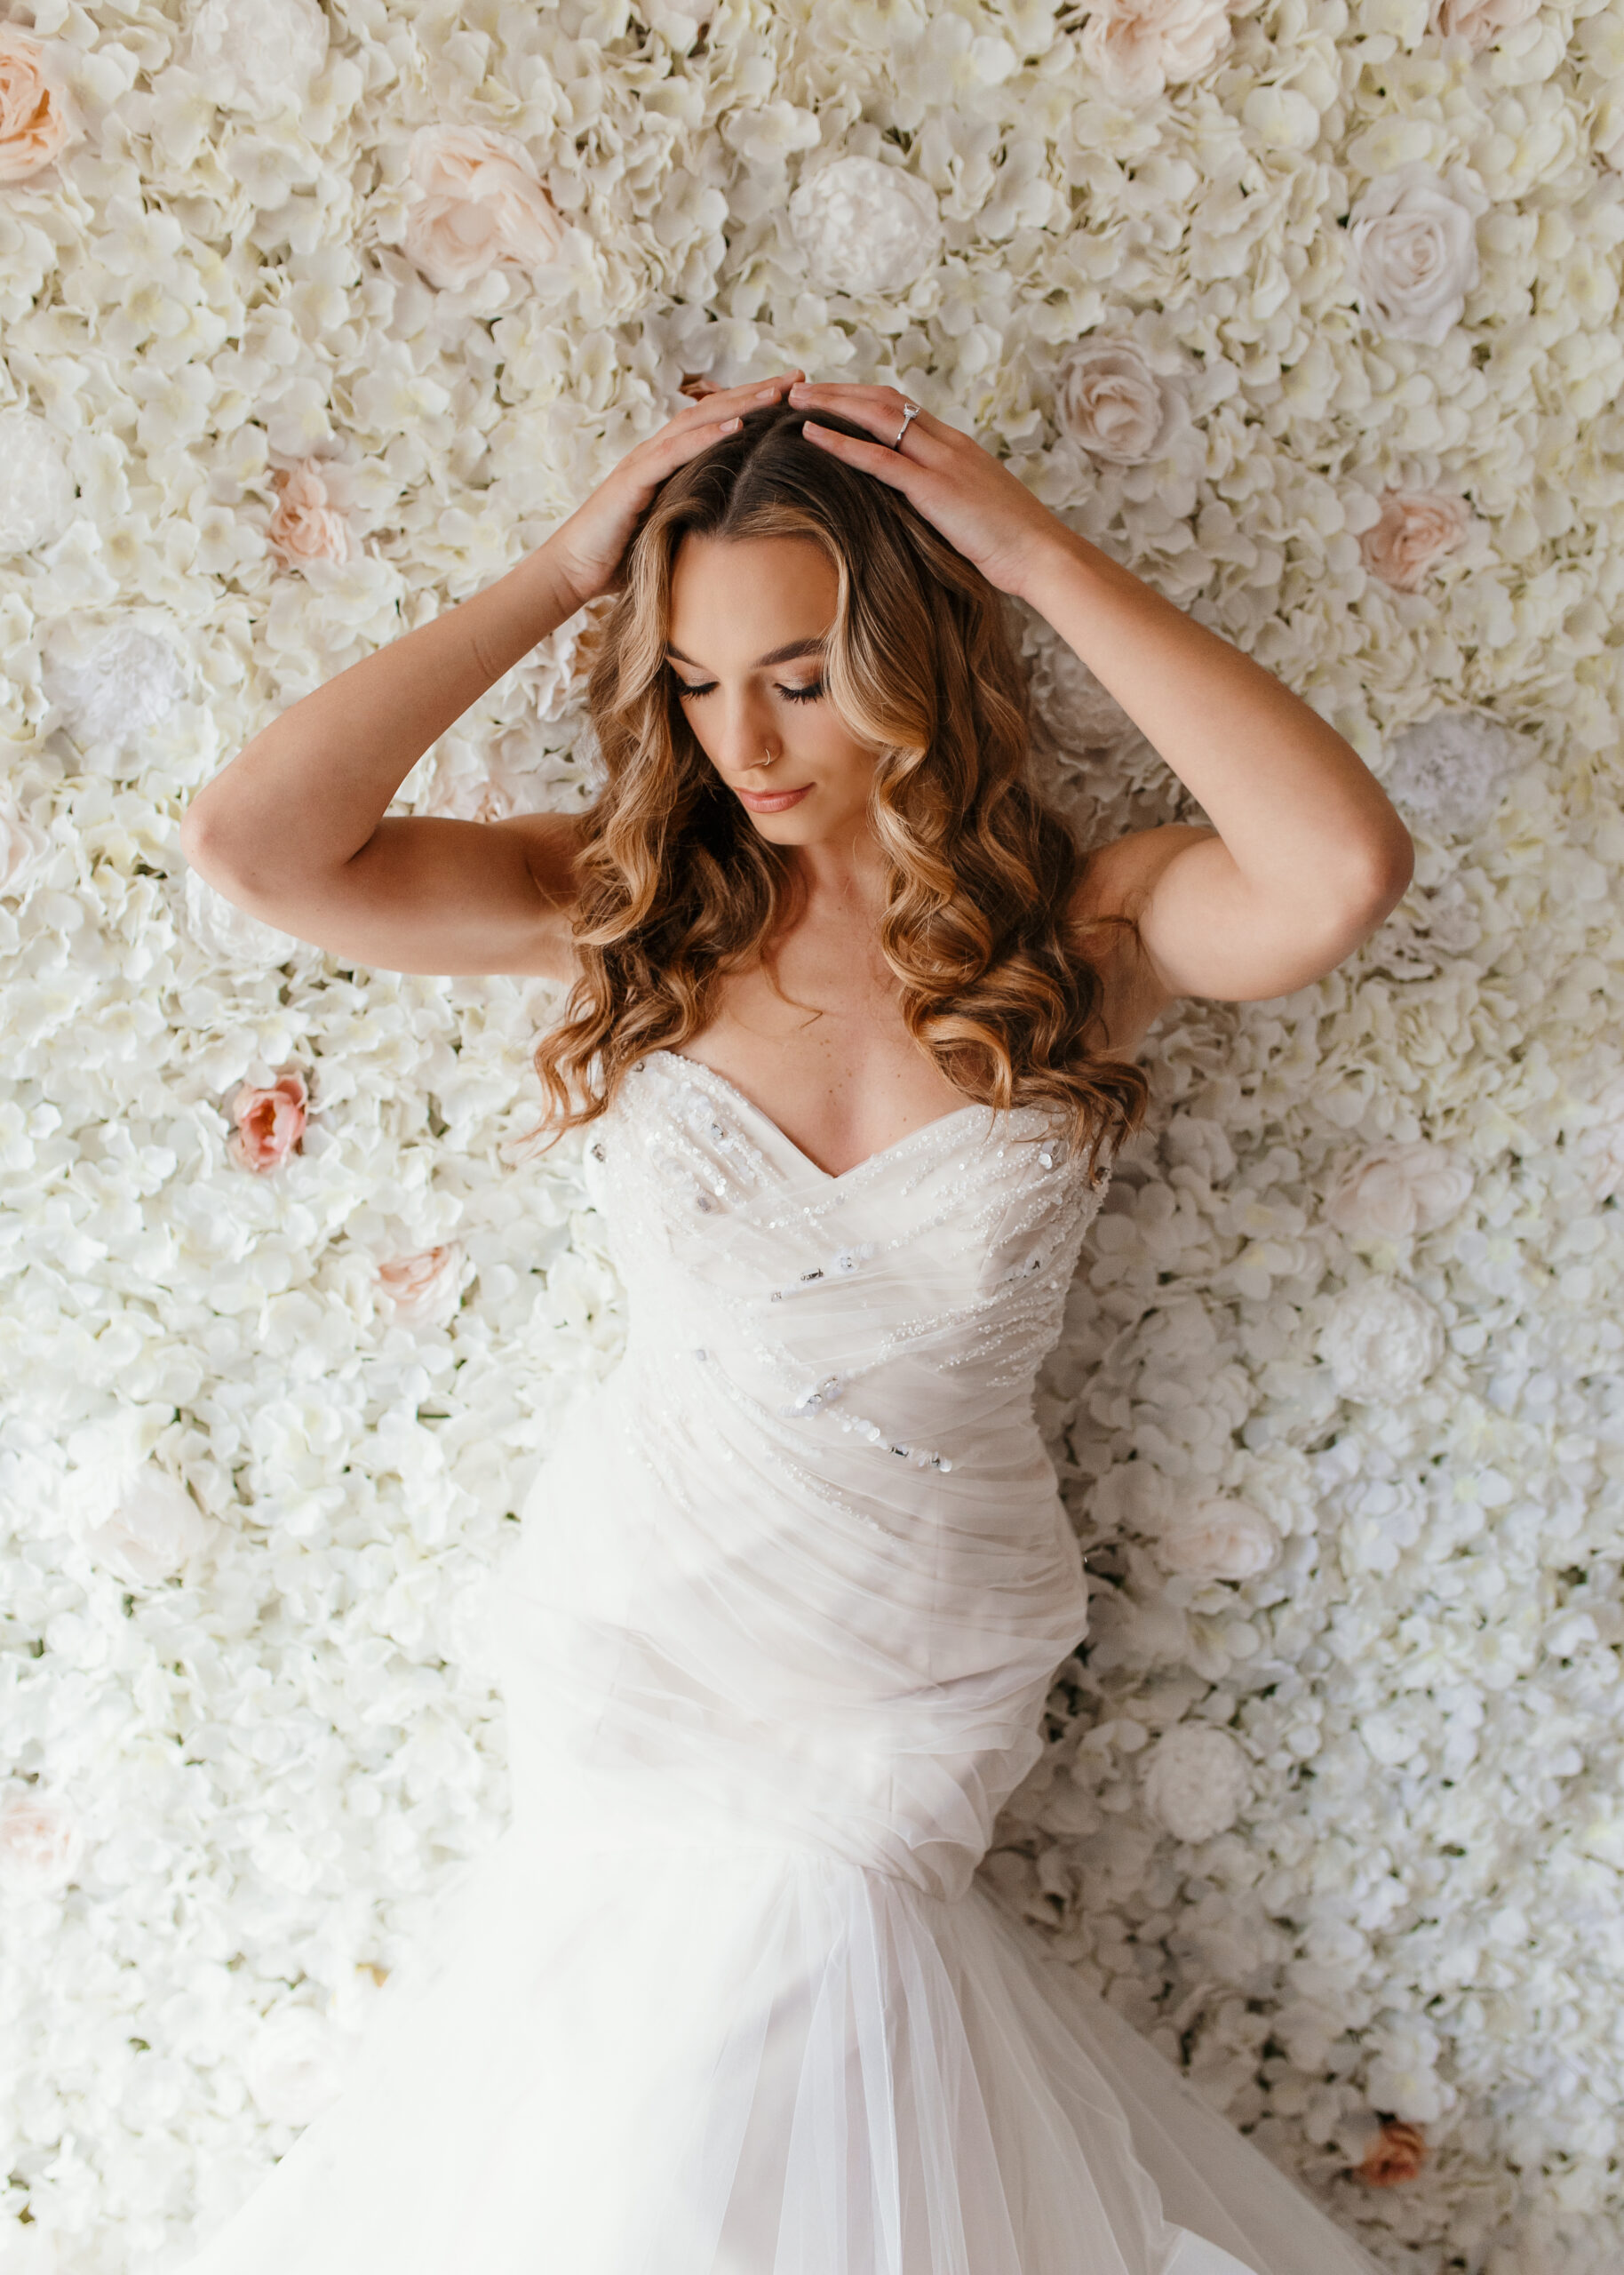 Bridal boudoir client leaning on rose posing for boudoir photo shoot in Richmond Virginia